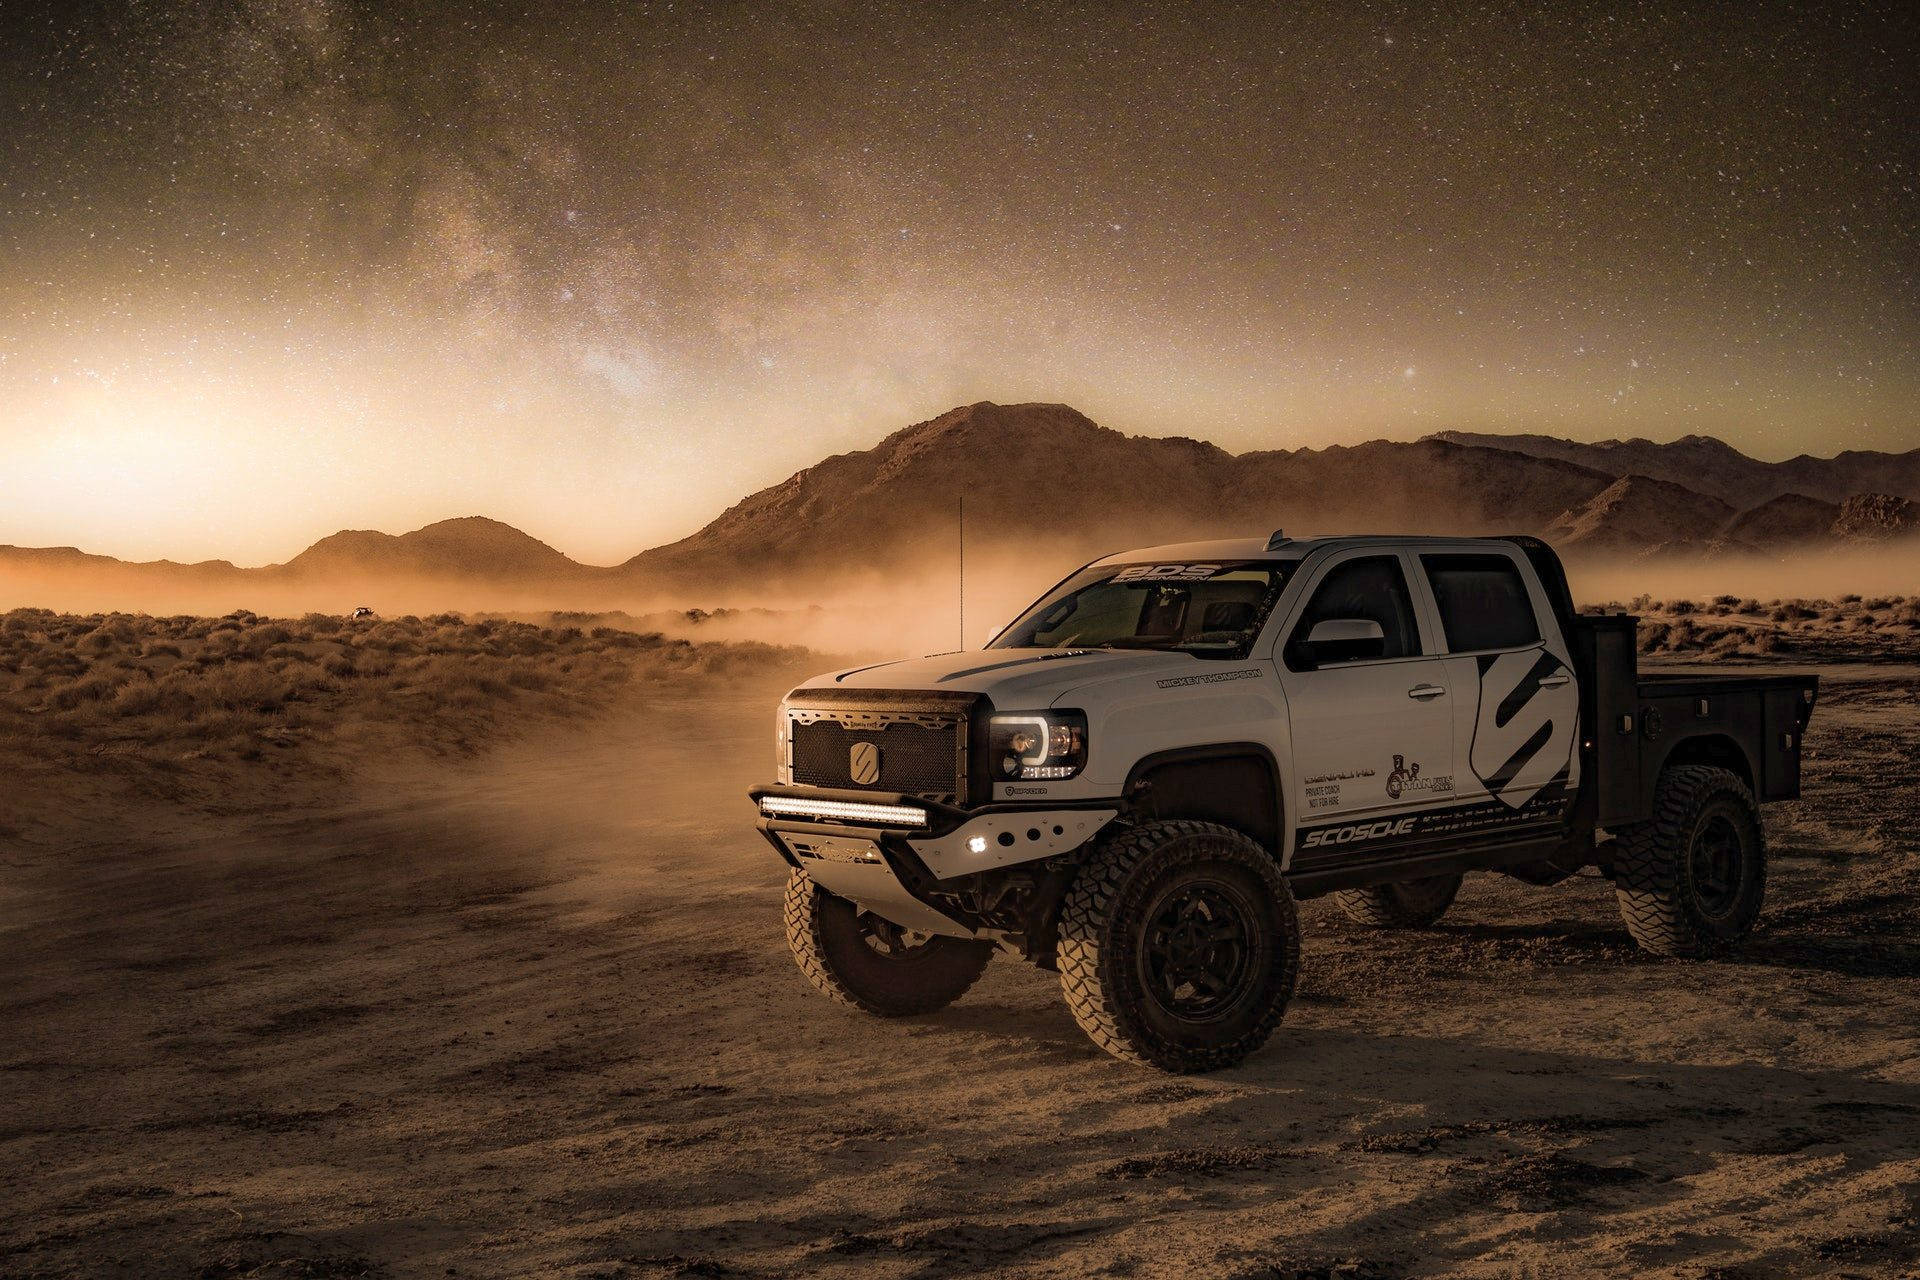 Cool Truck In Smokey Desert Wallpaper